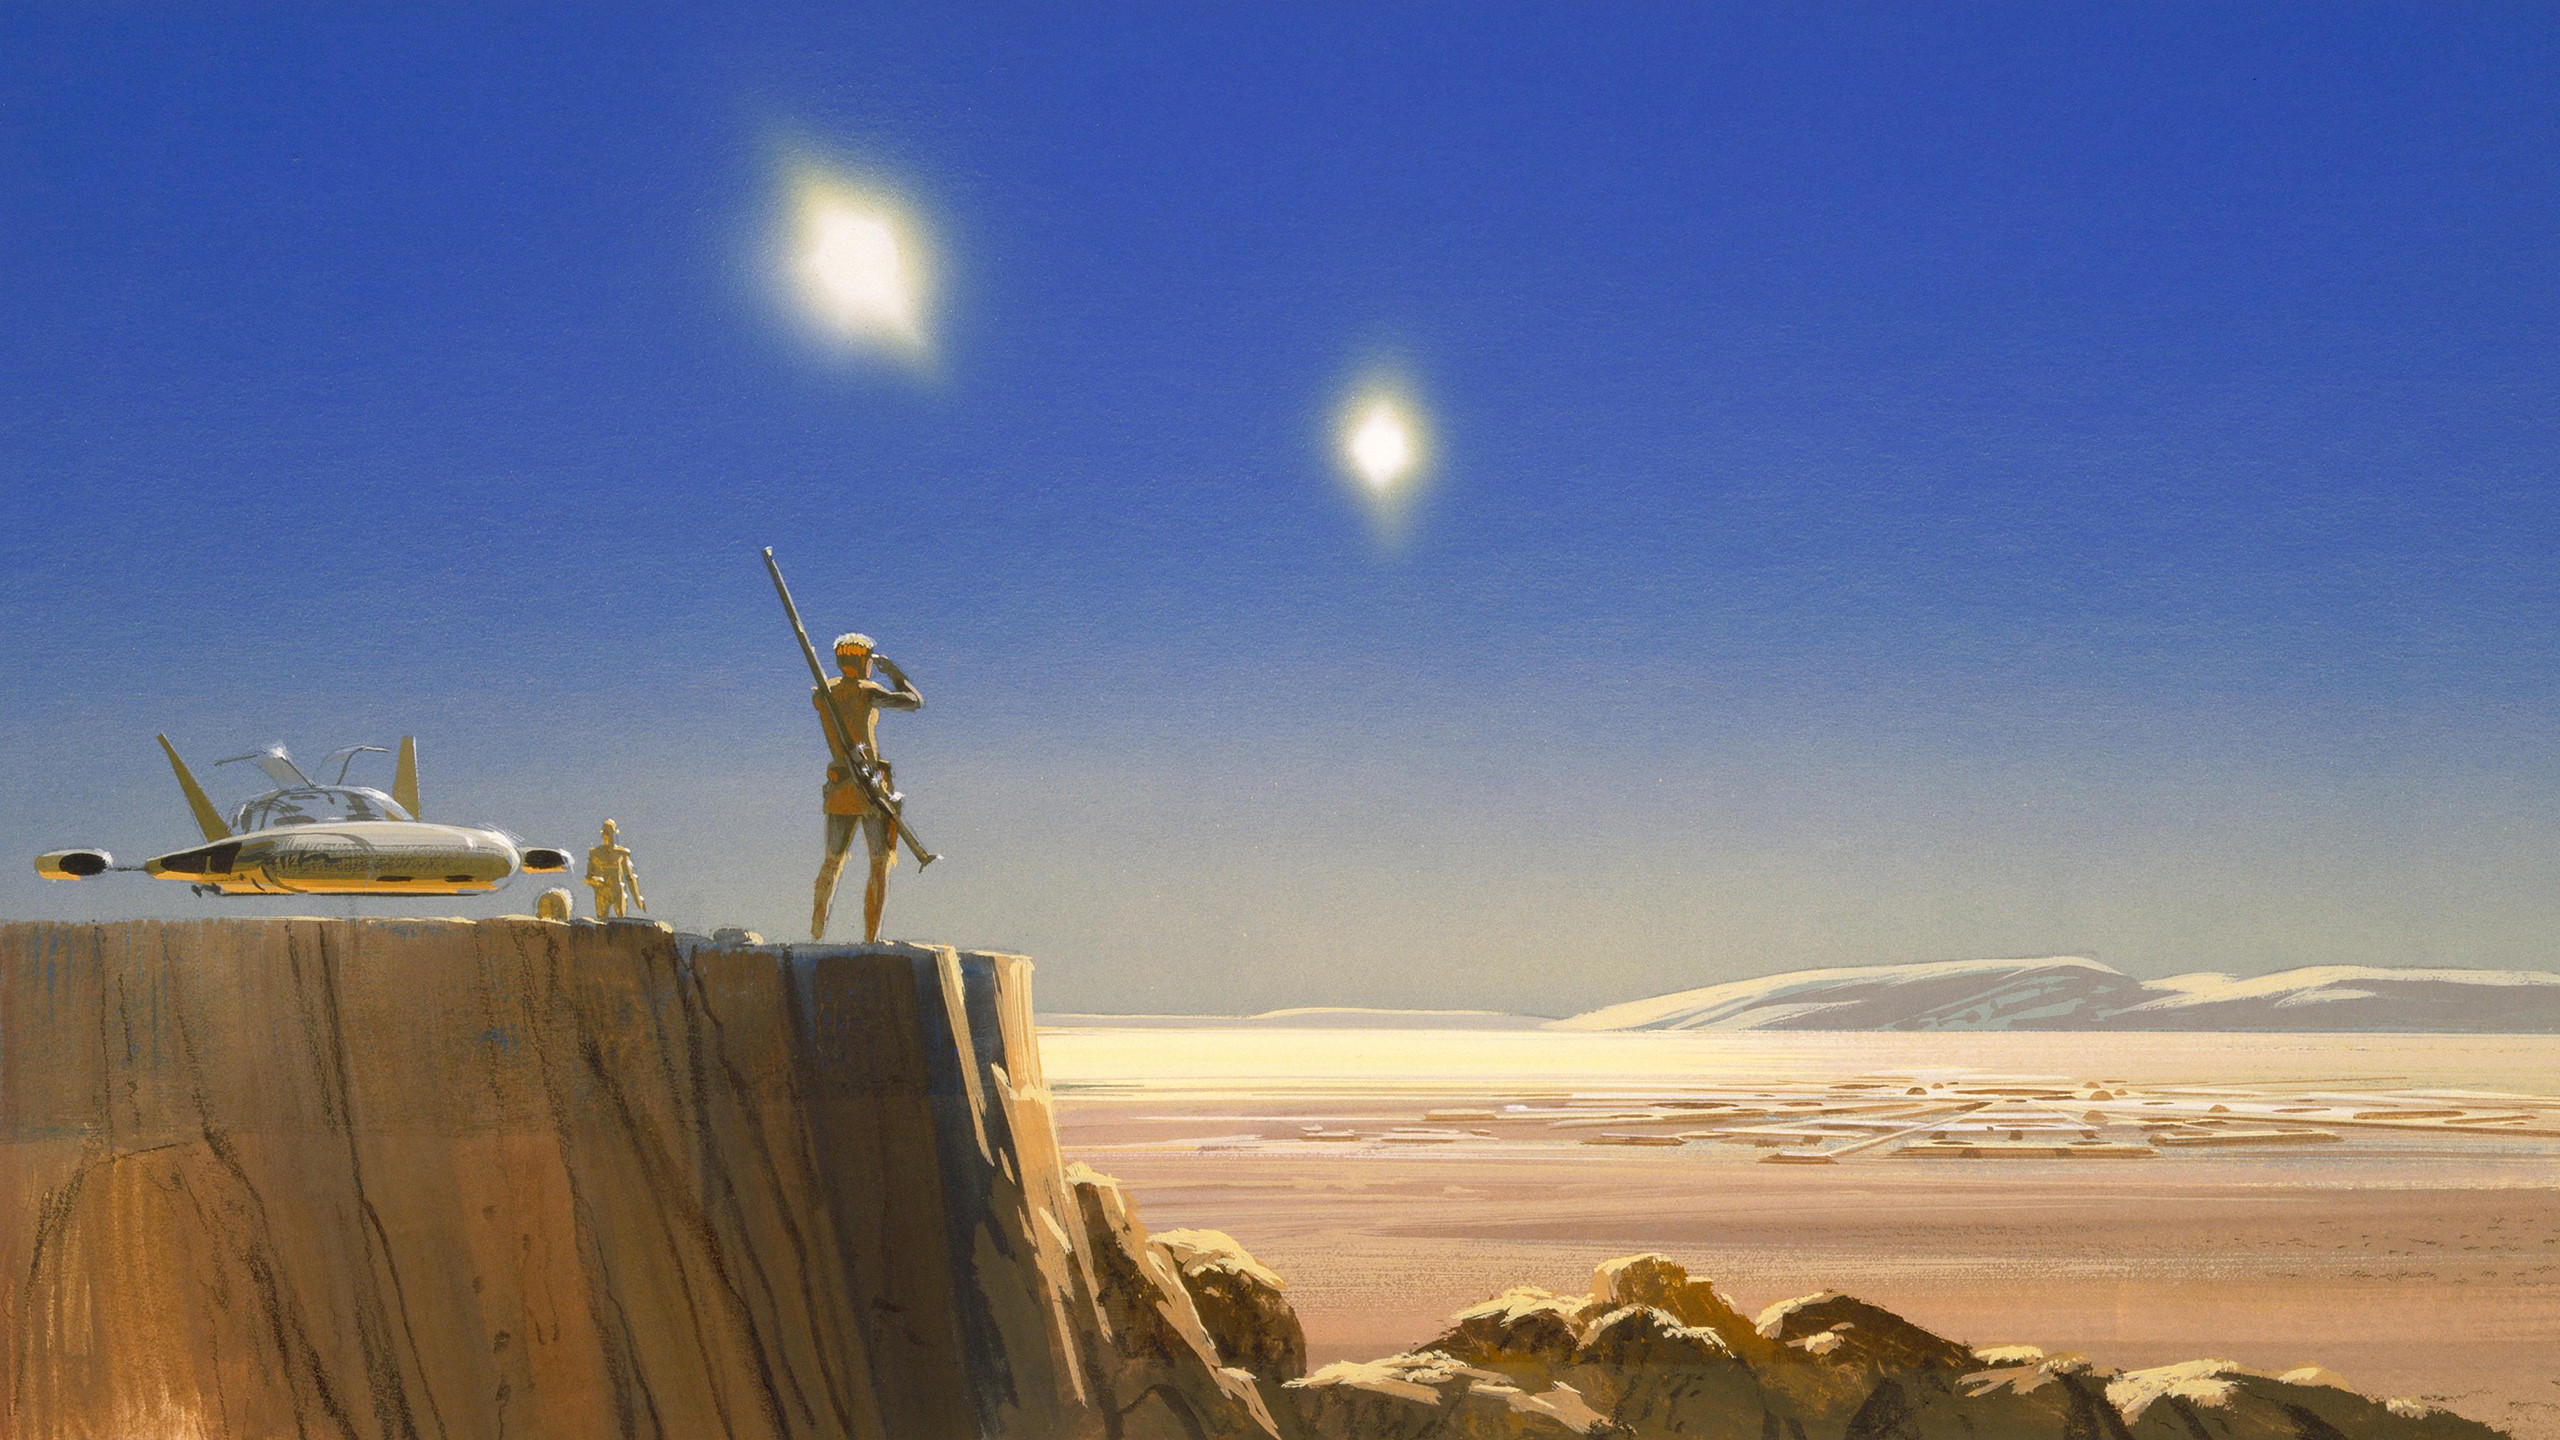 General 2560x1440 artwork painting fantasy art space sky science fiction planet landscape Star Wars Luke Skywalker Tatooine Ralph McQuarrie landspeeder C-3PO R2-D2